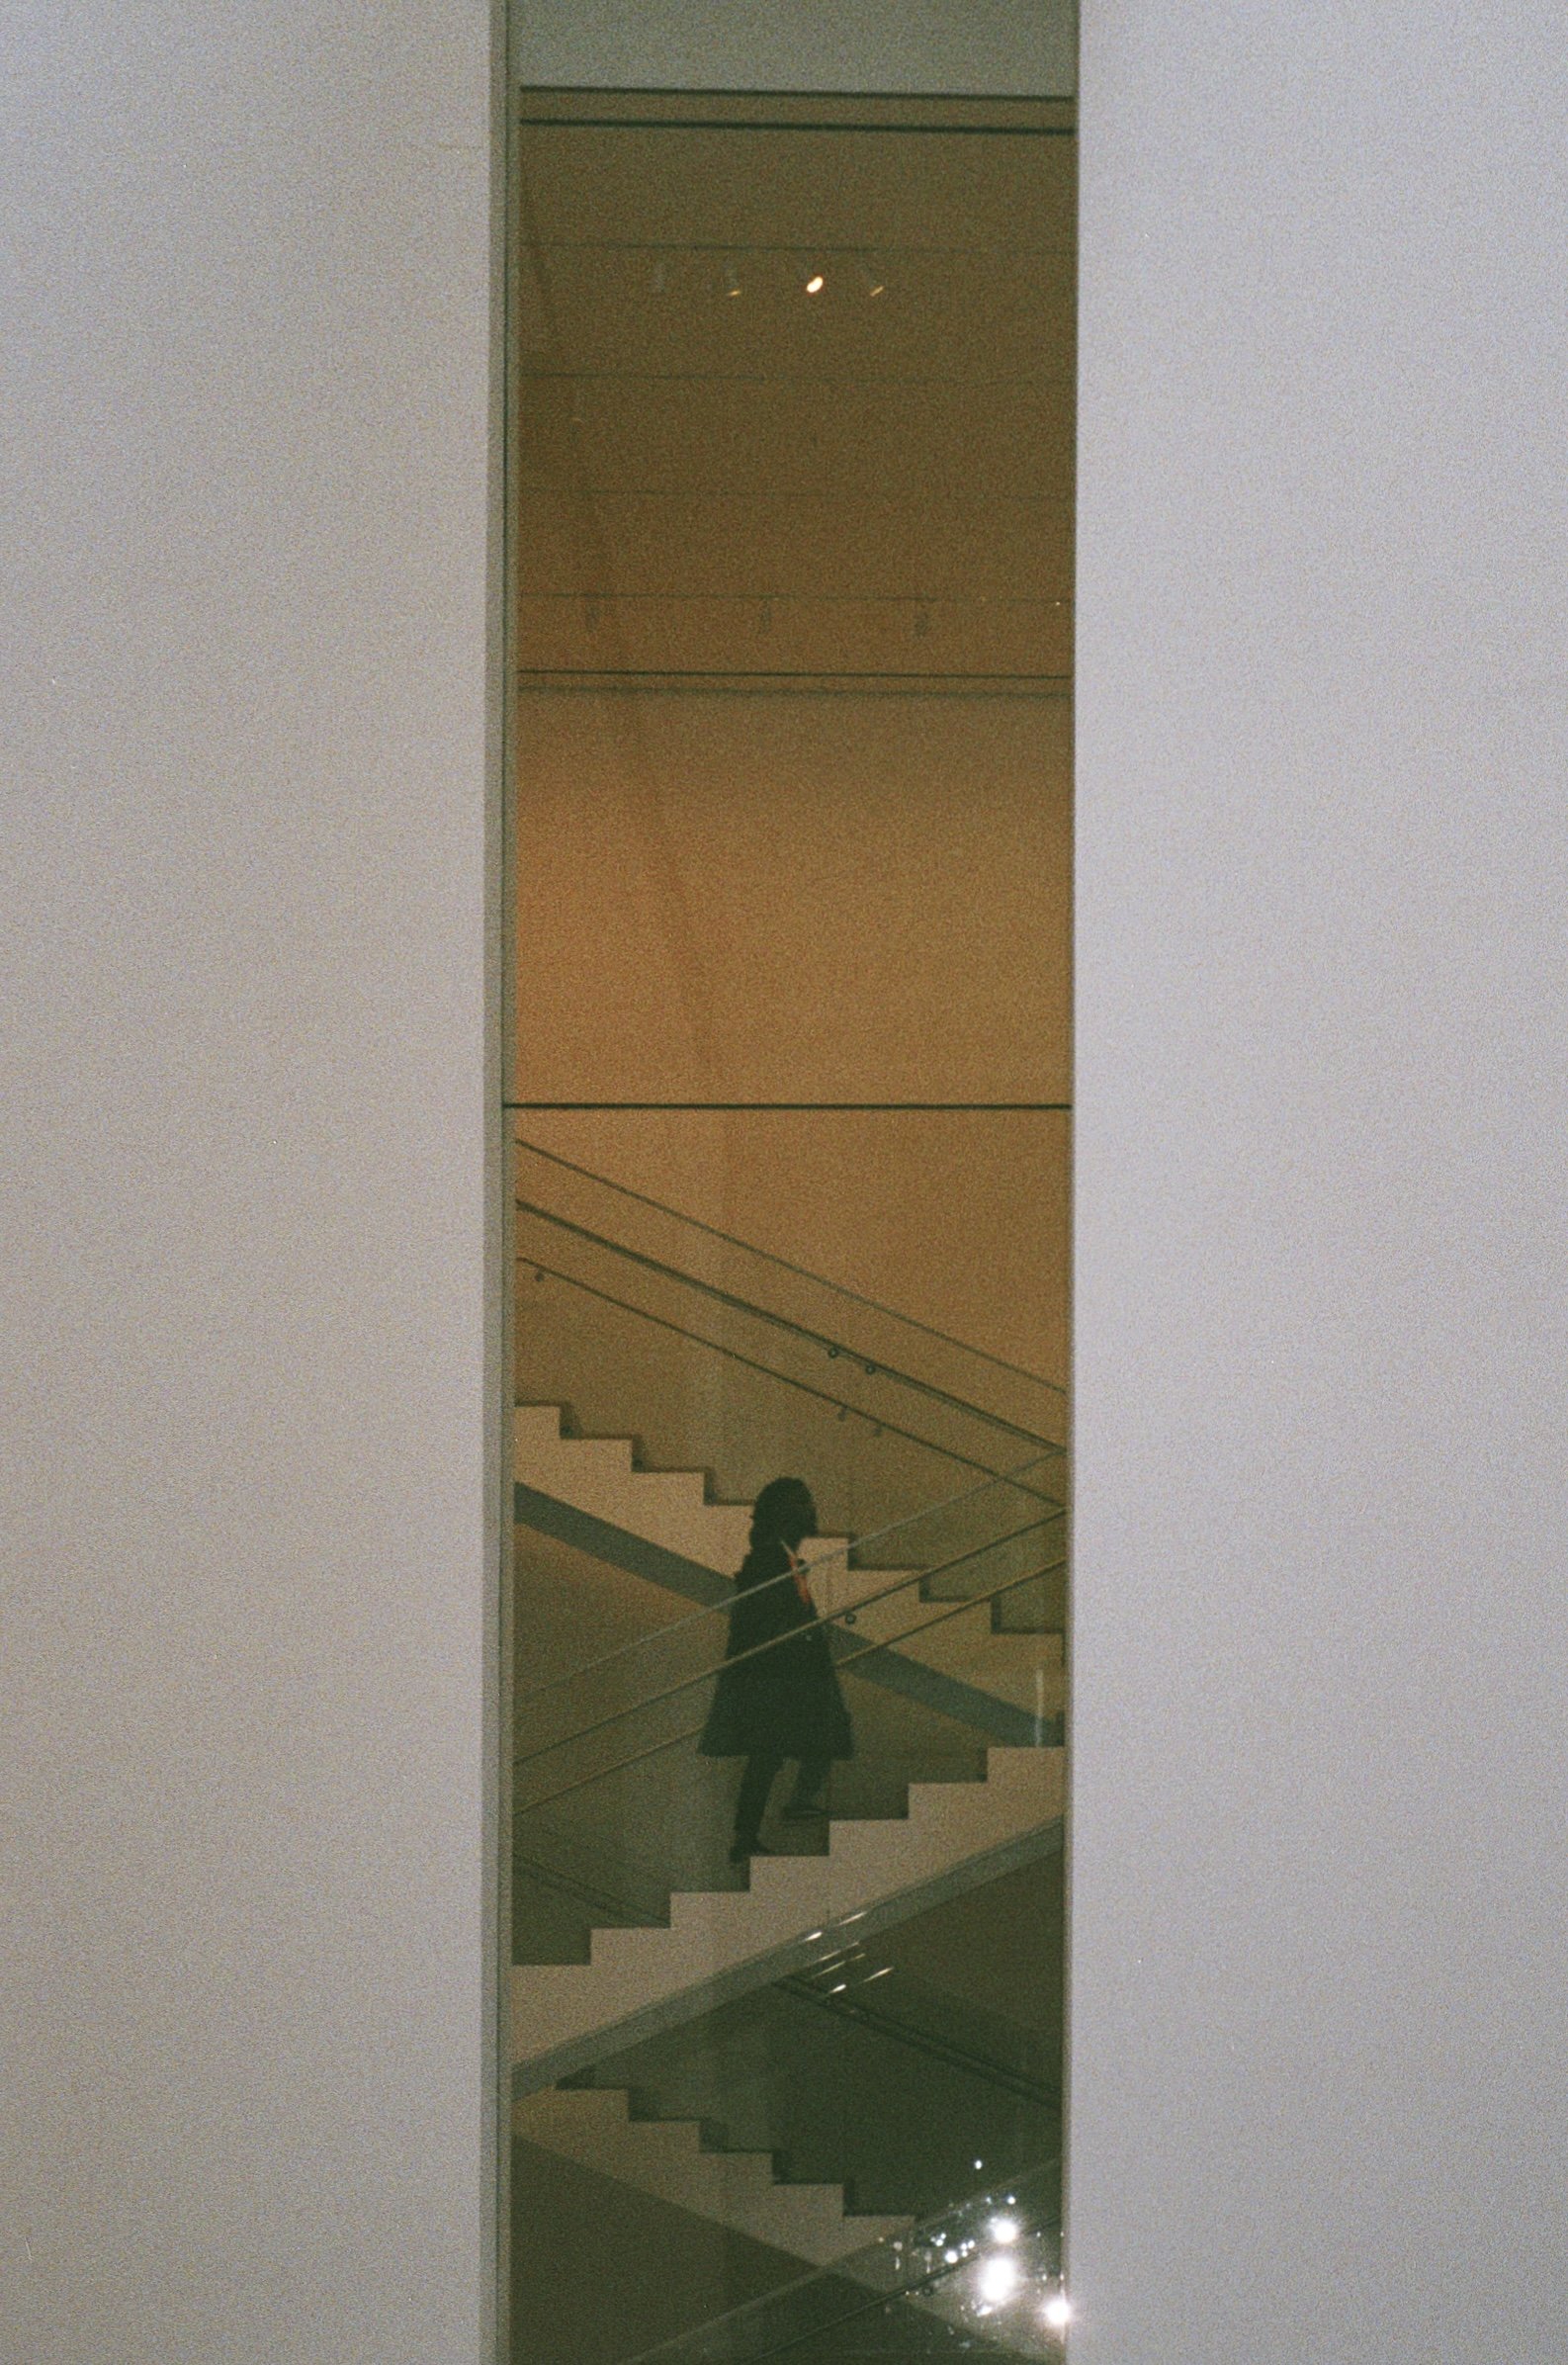 stranger in MoMA, new york, 2019